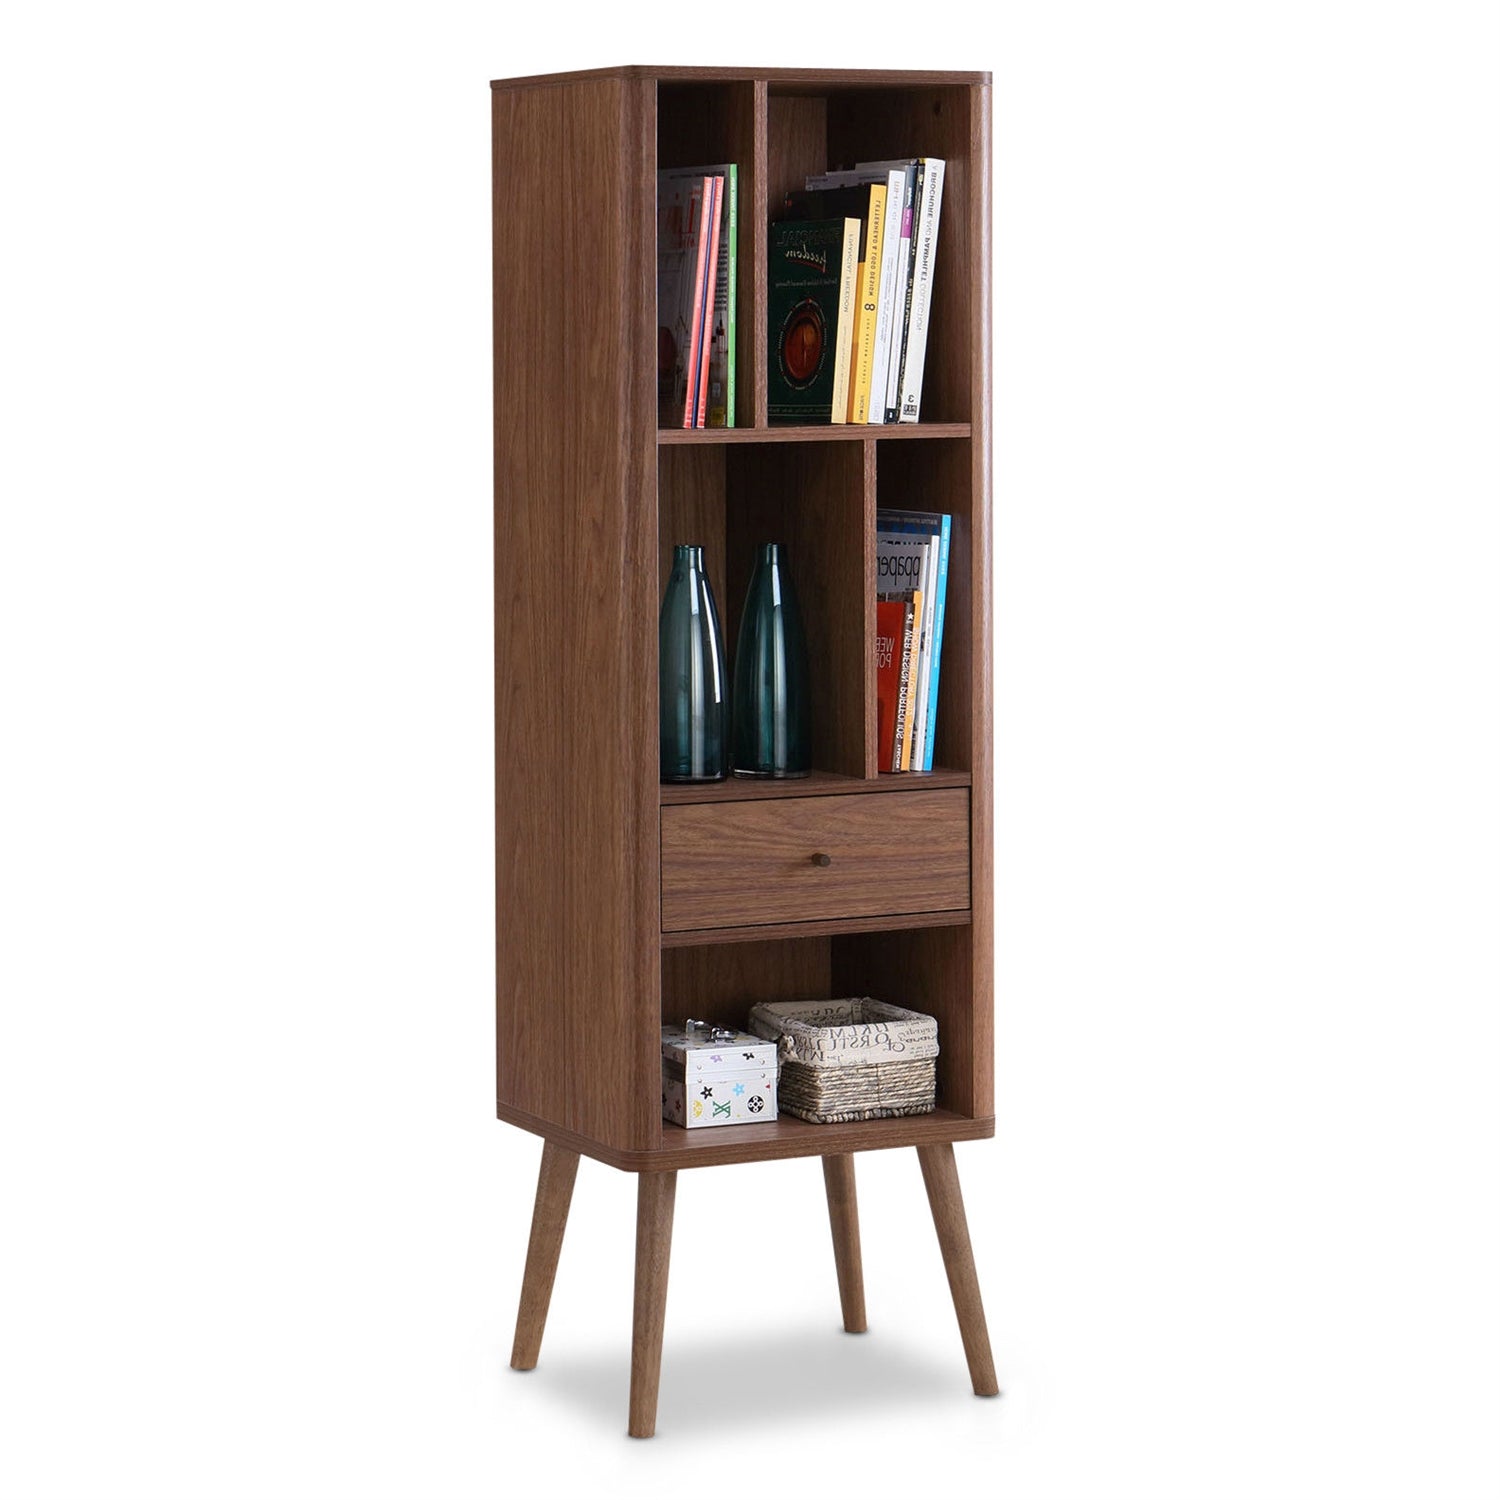 Mid-Century Modern Bookcase Display Shelf in Walnut Wood Finish